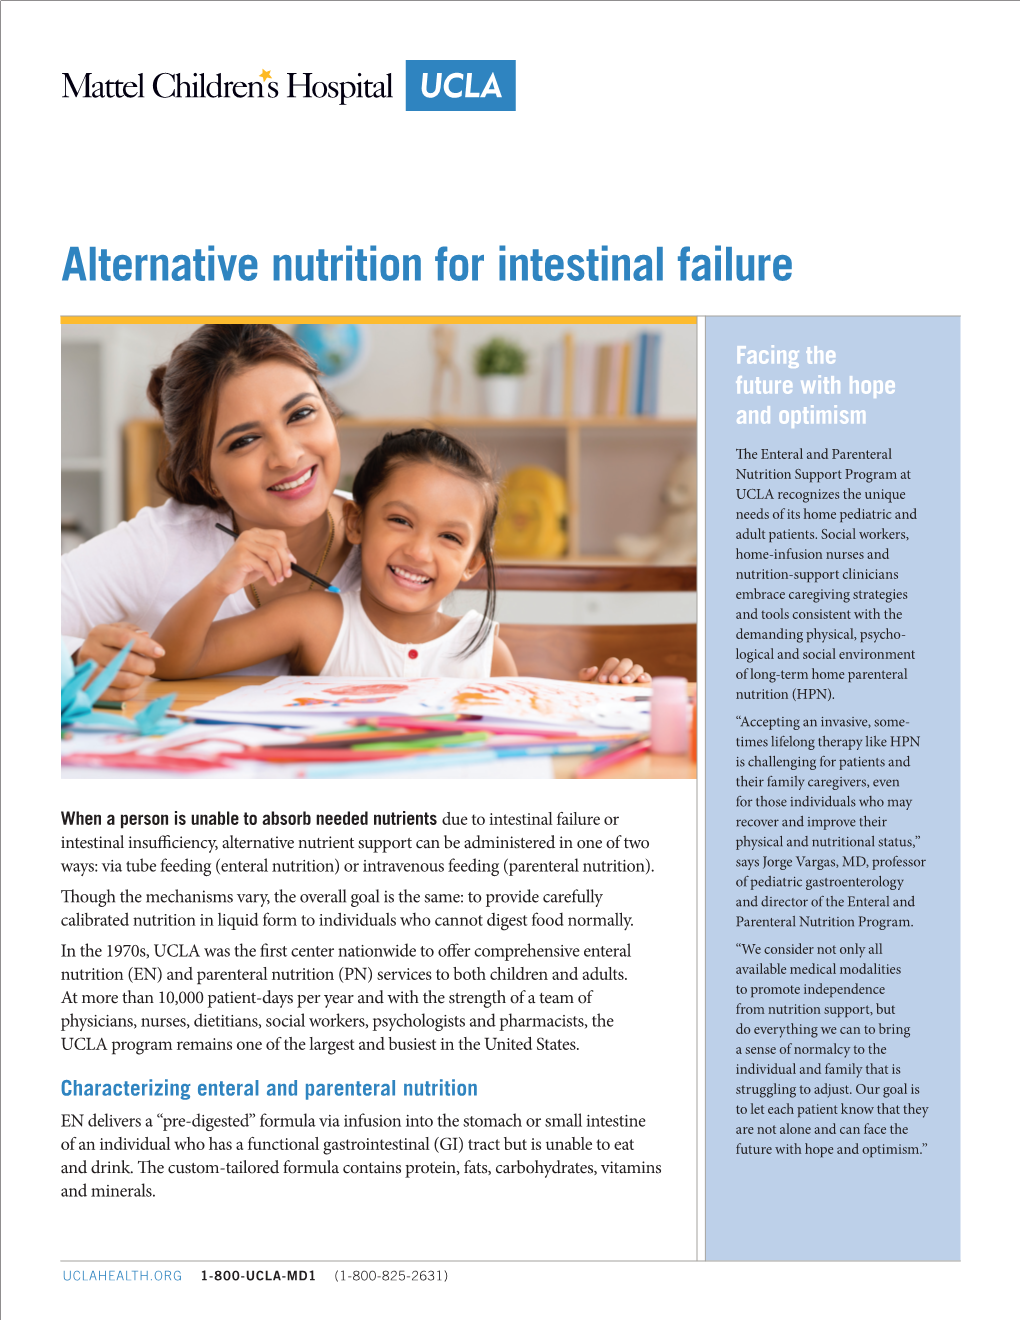 Alternative Nutrition for Intestinal Failure